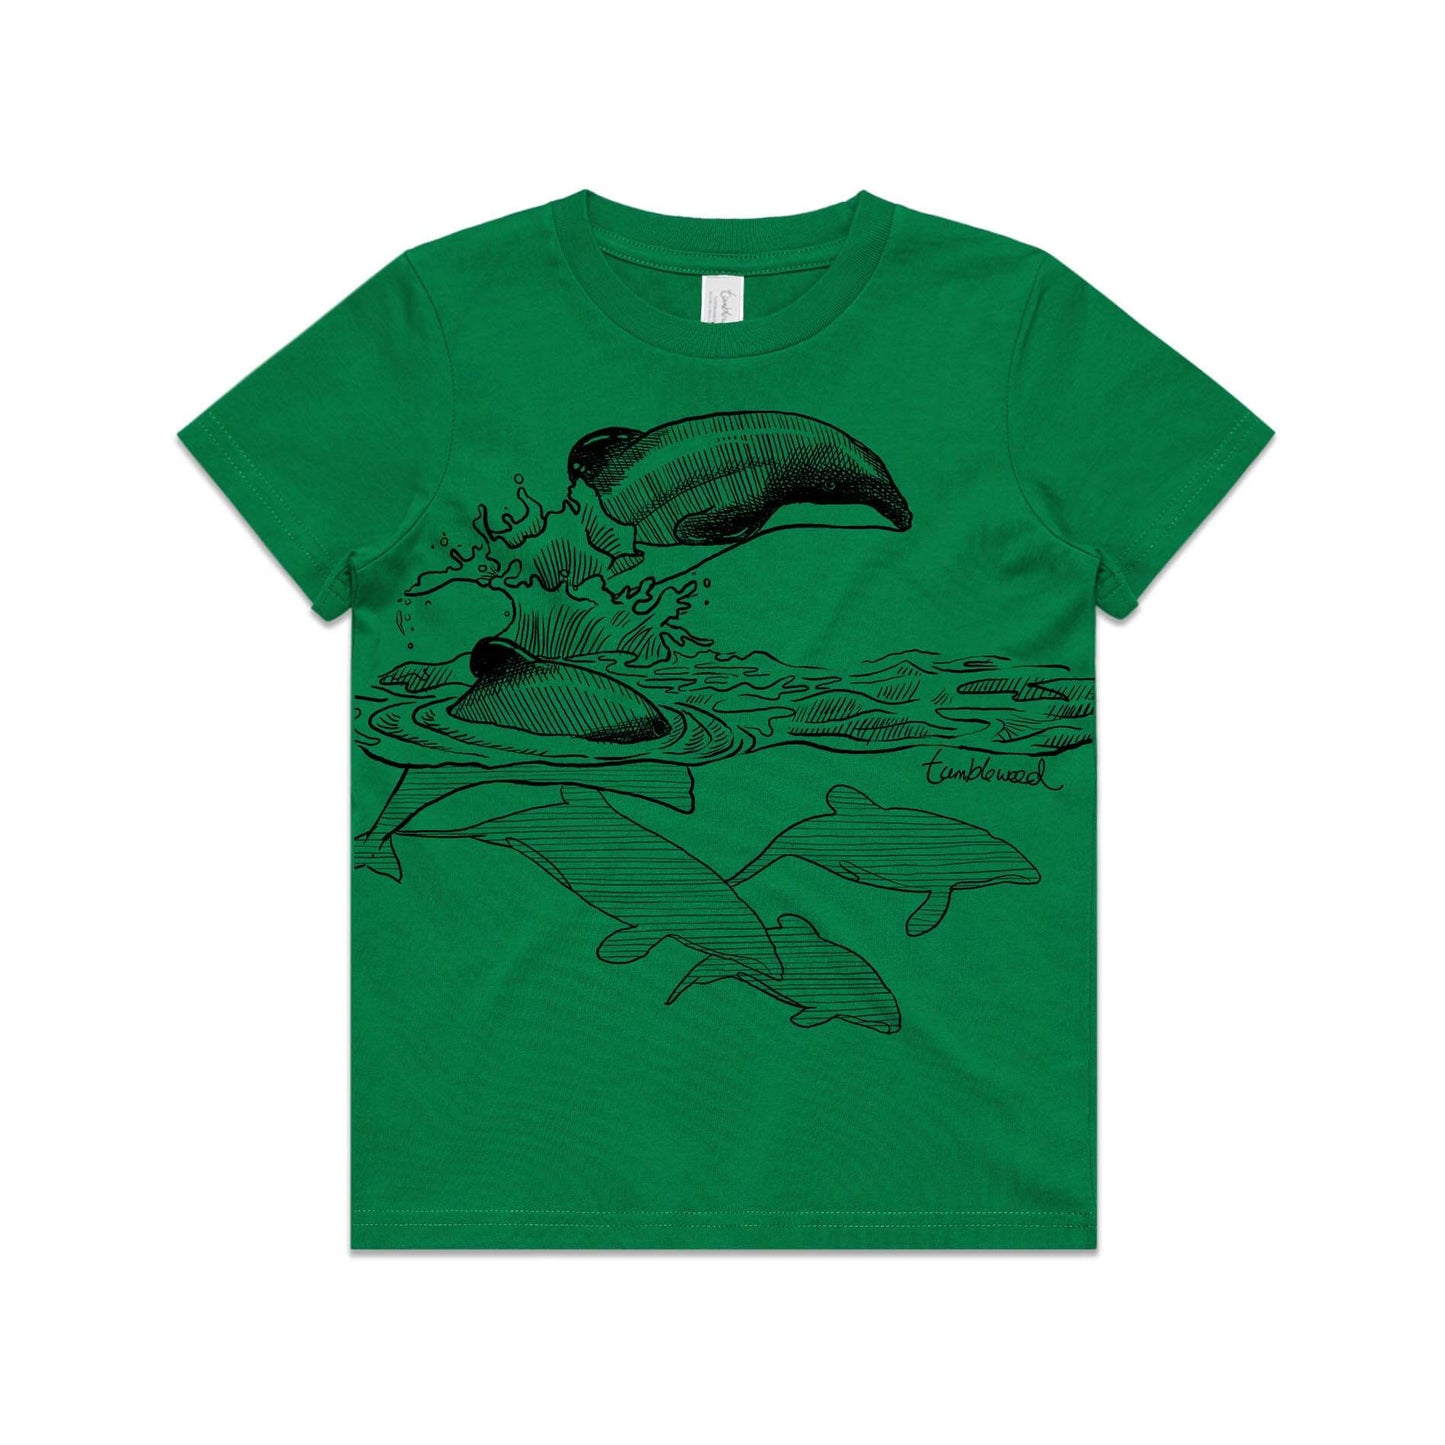 Green, cotton kids' t-shirt with screen printed ducks maui dolphin design.